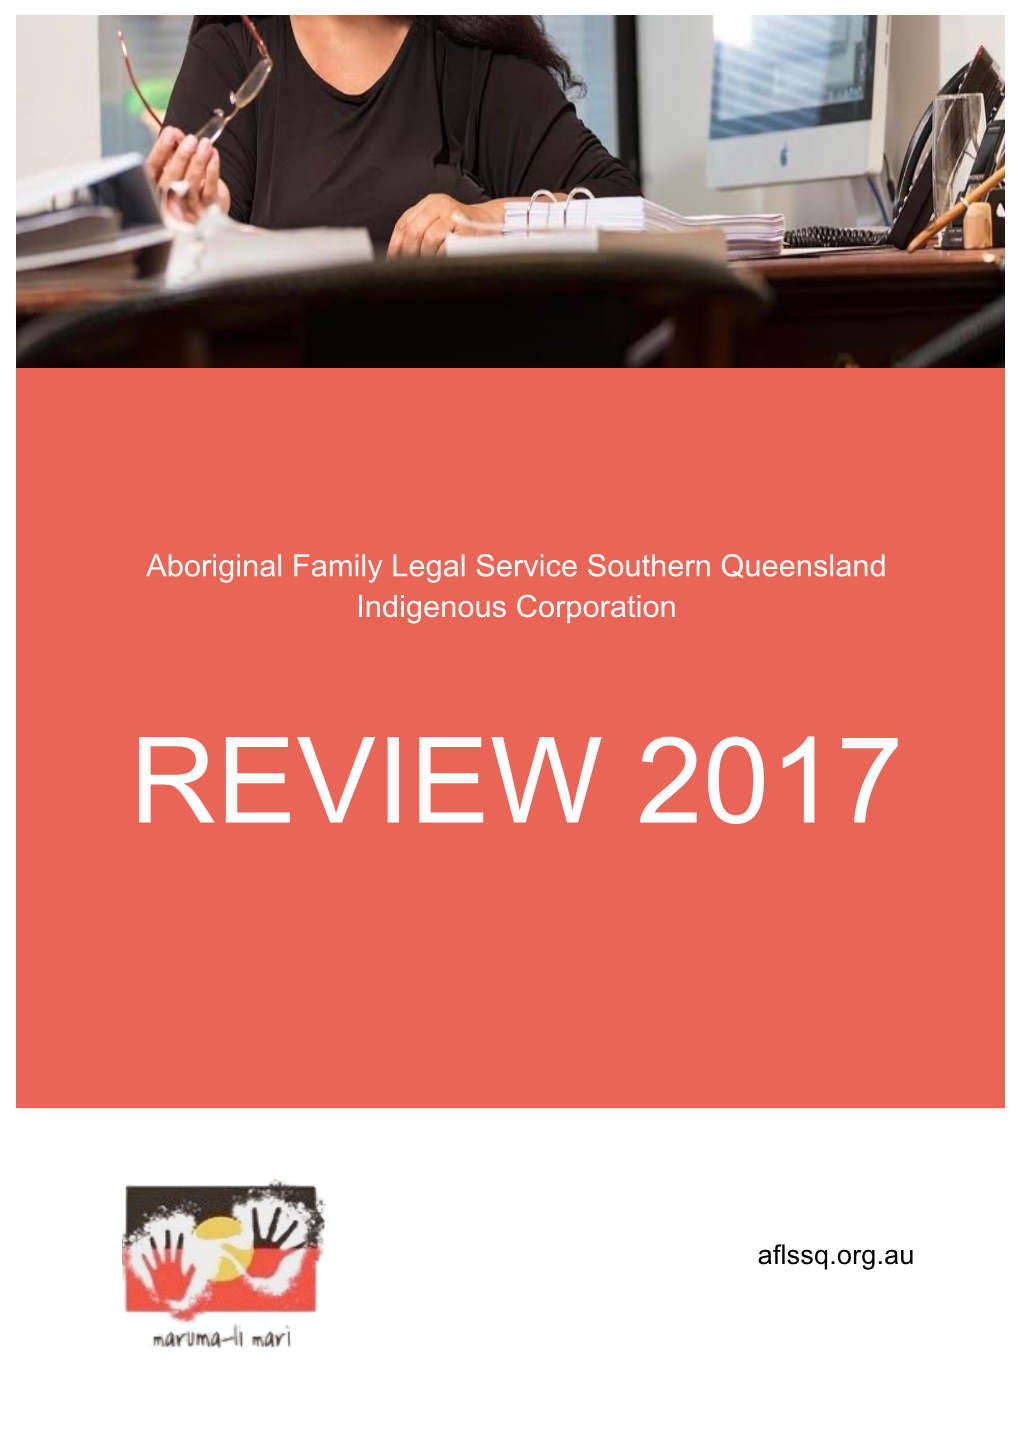 AFLSSQ Review 2017